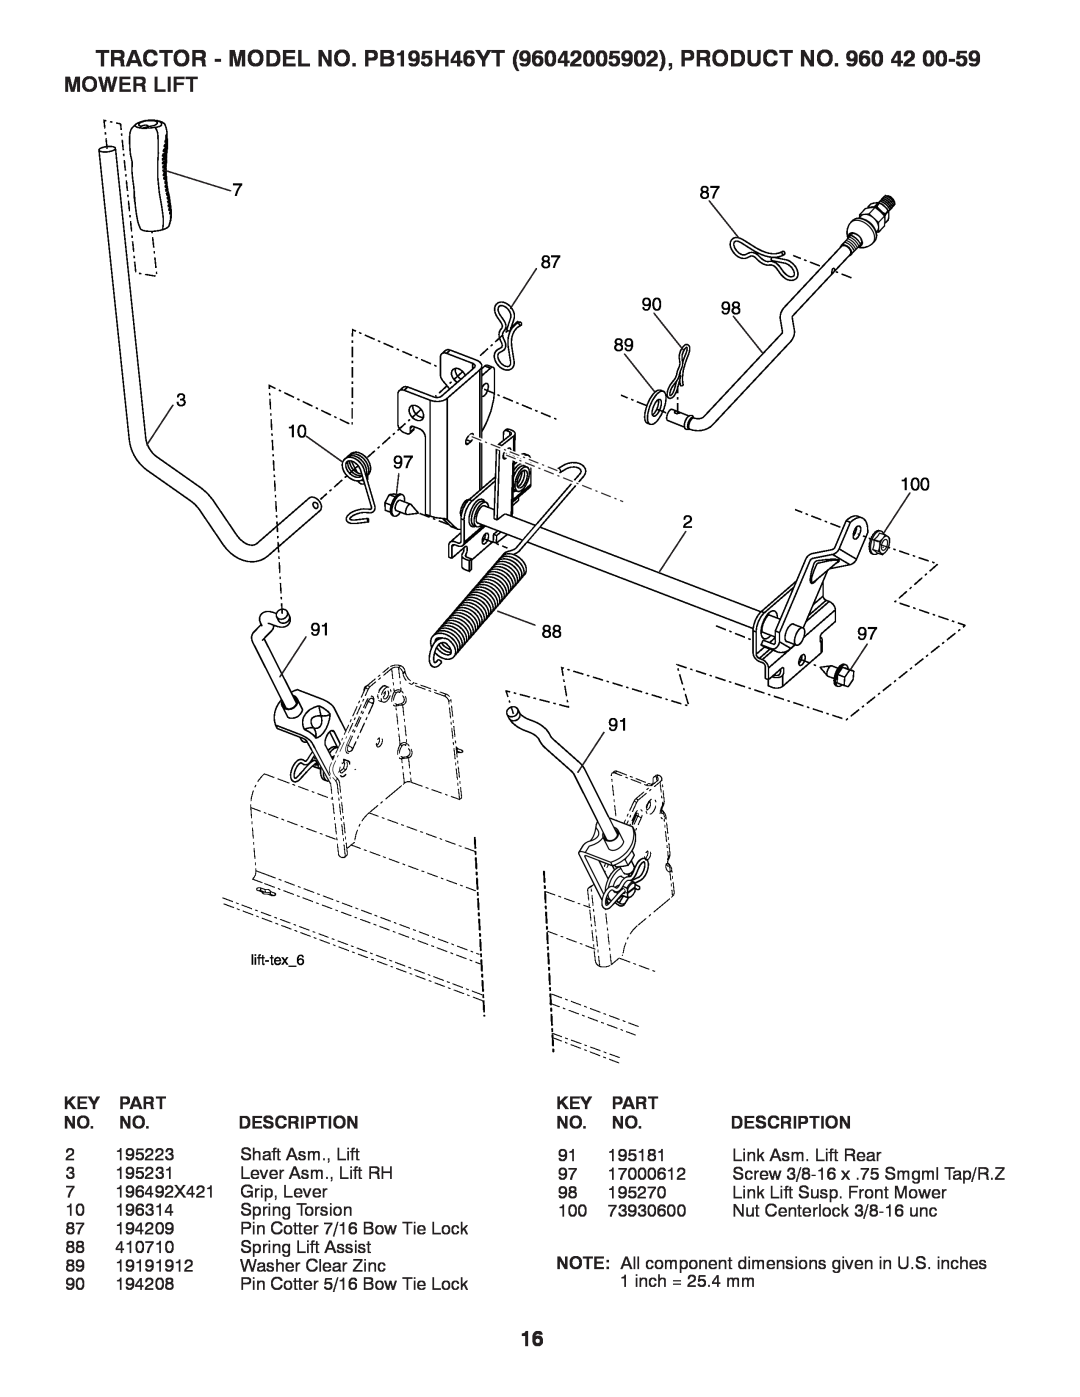 Poulan manual TRACTOR - MODEL NO. PB195H46YT 96042005902, PRODUCT NO, lift-tex6 